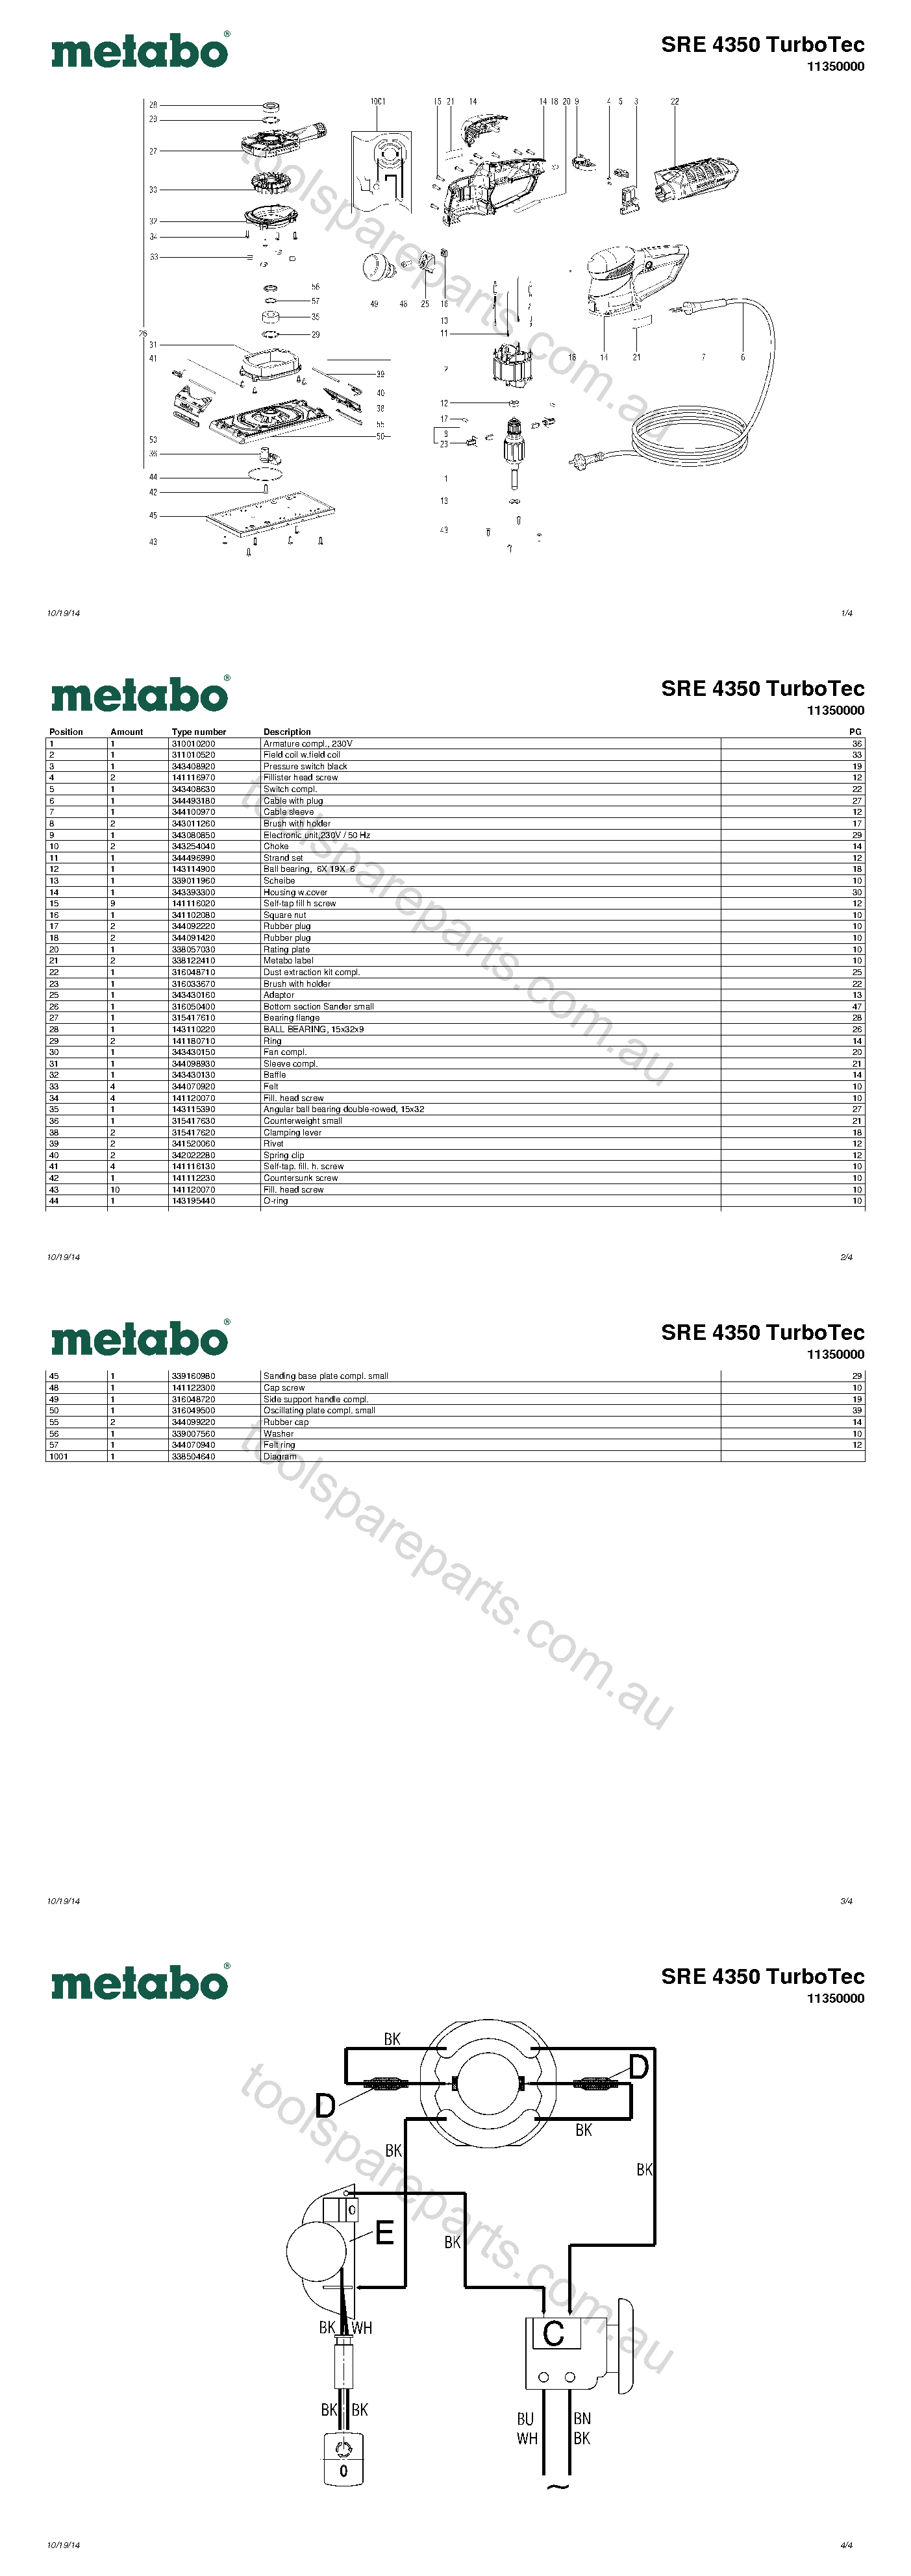 Metabo SRE 4350 TurboTec 11350000  Diagram 1